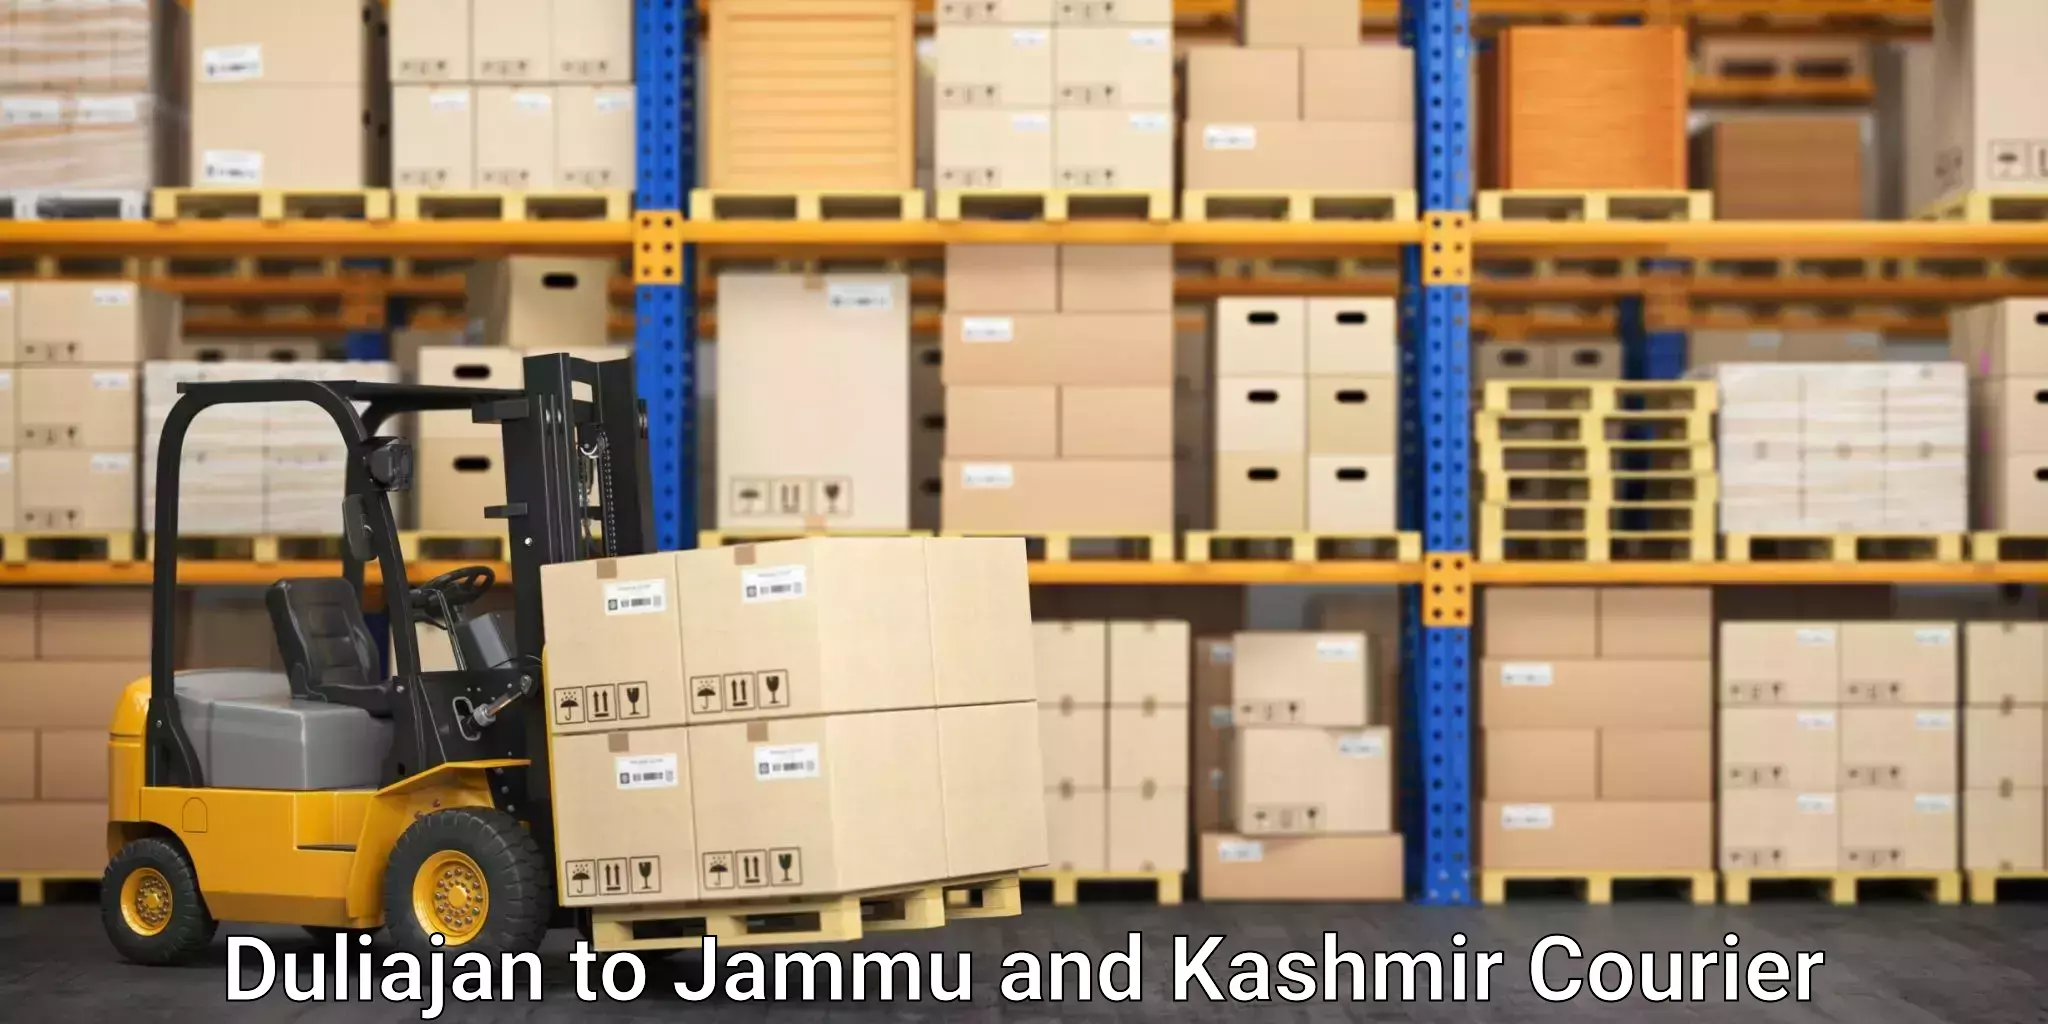 Secure package delivery Duliajan to Srinagar Kashmir